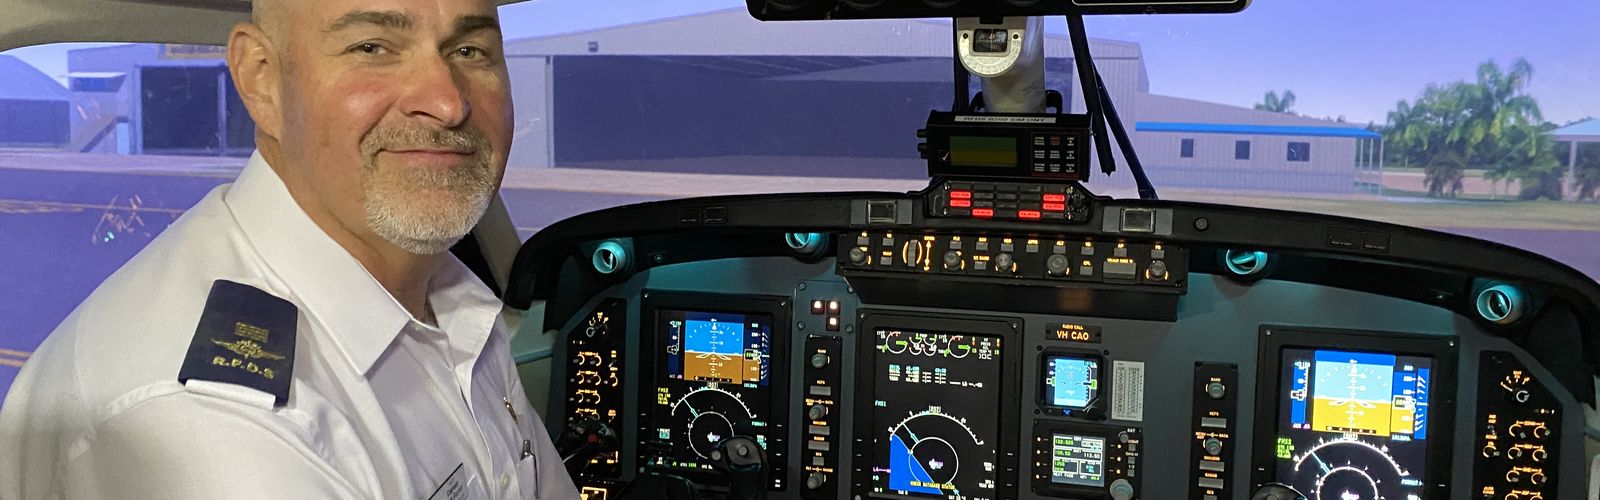 RFDS (Queensland Section) Pilot Mick Porfiri in the flight simulator